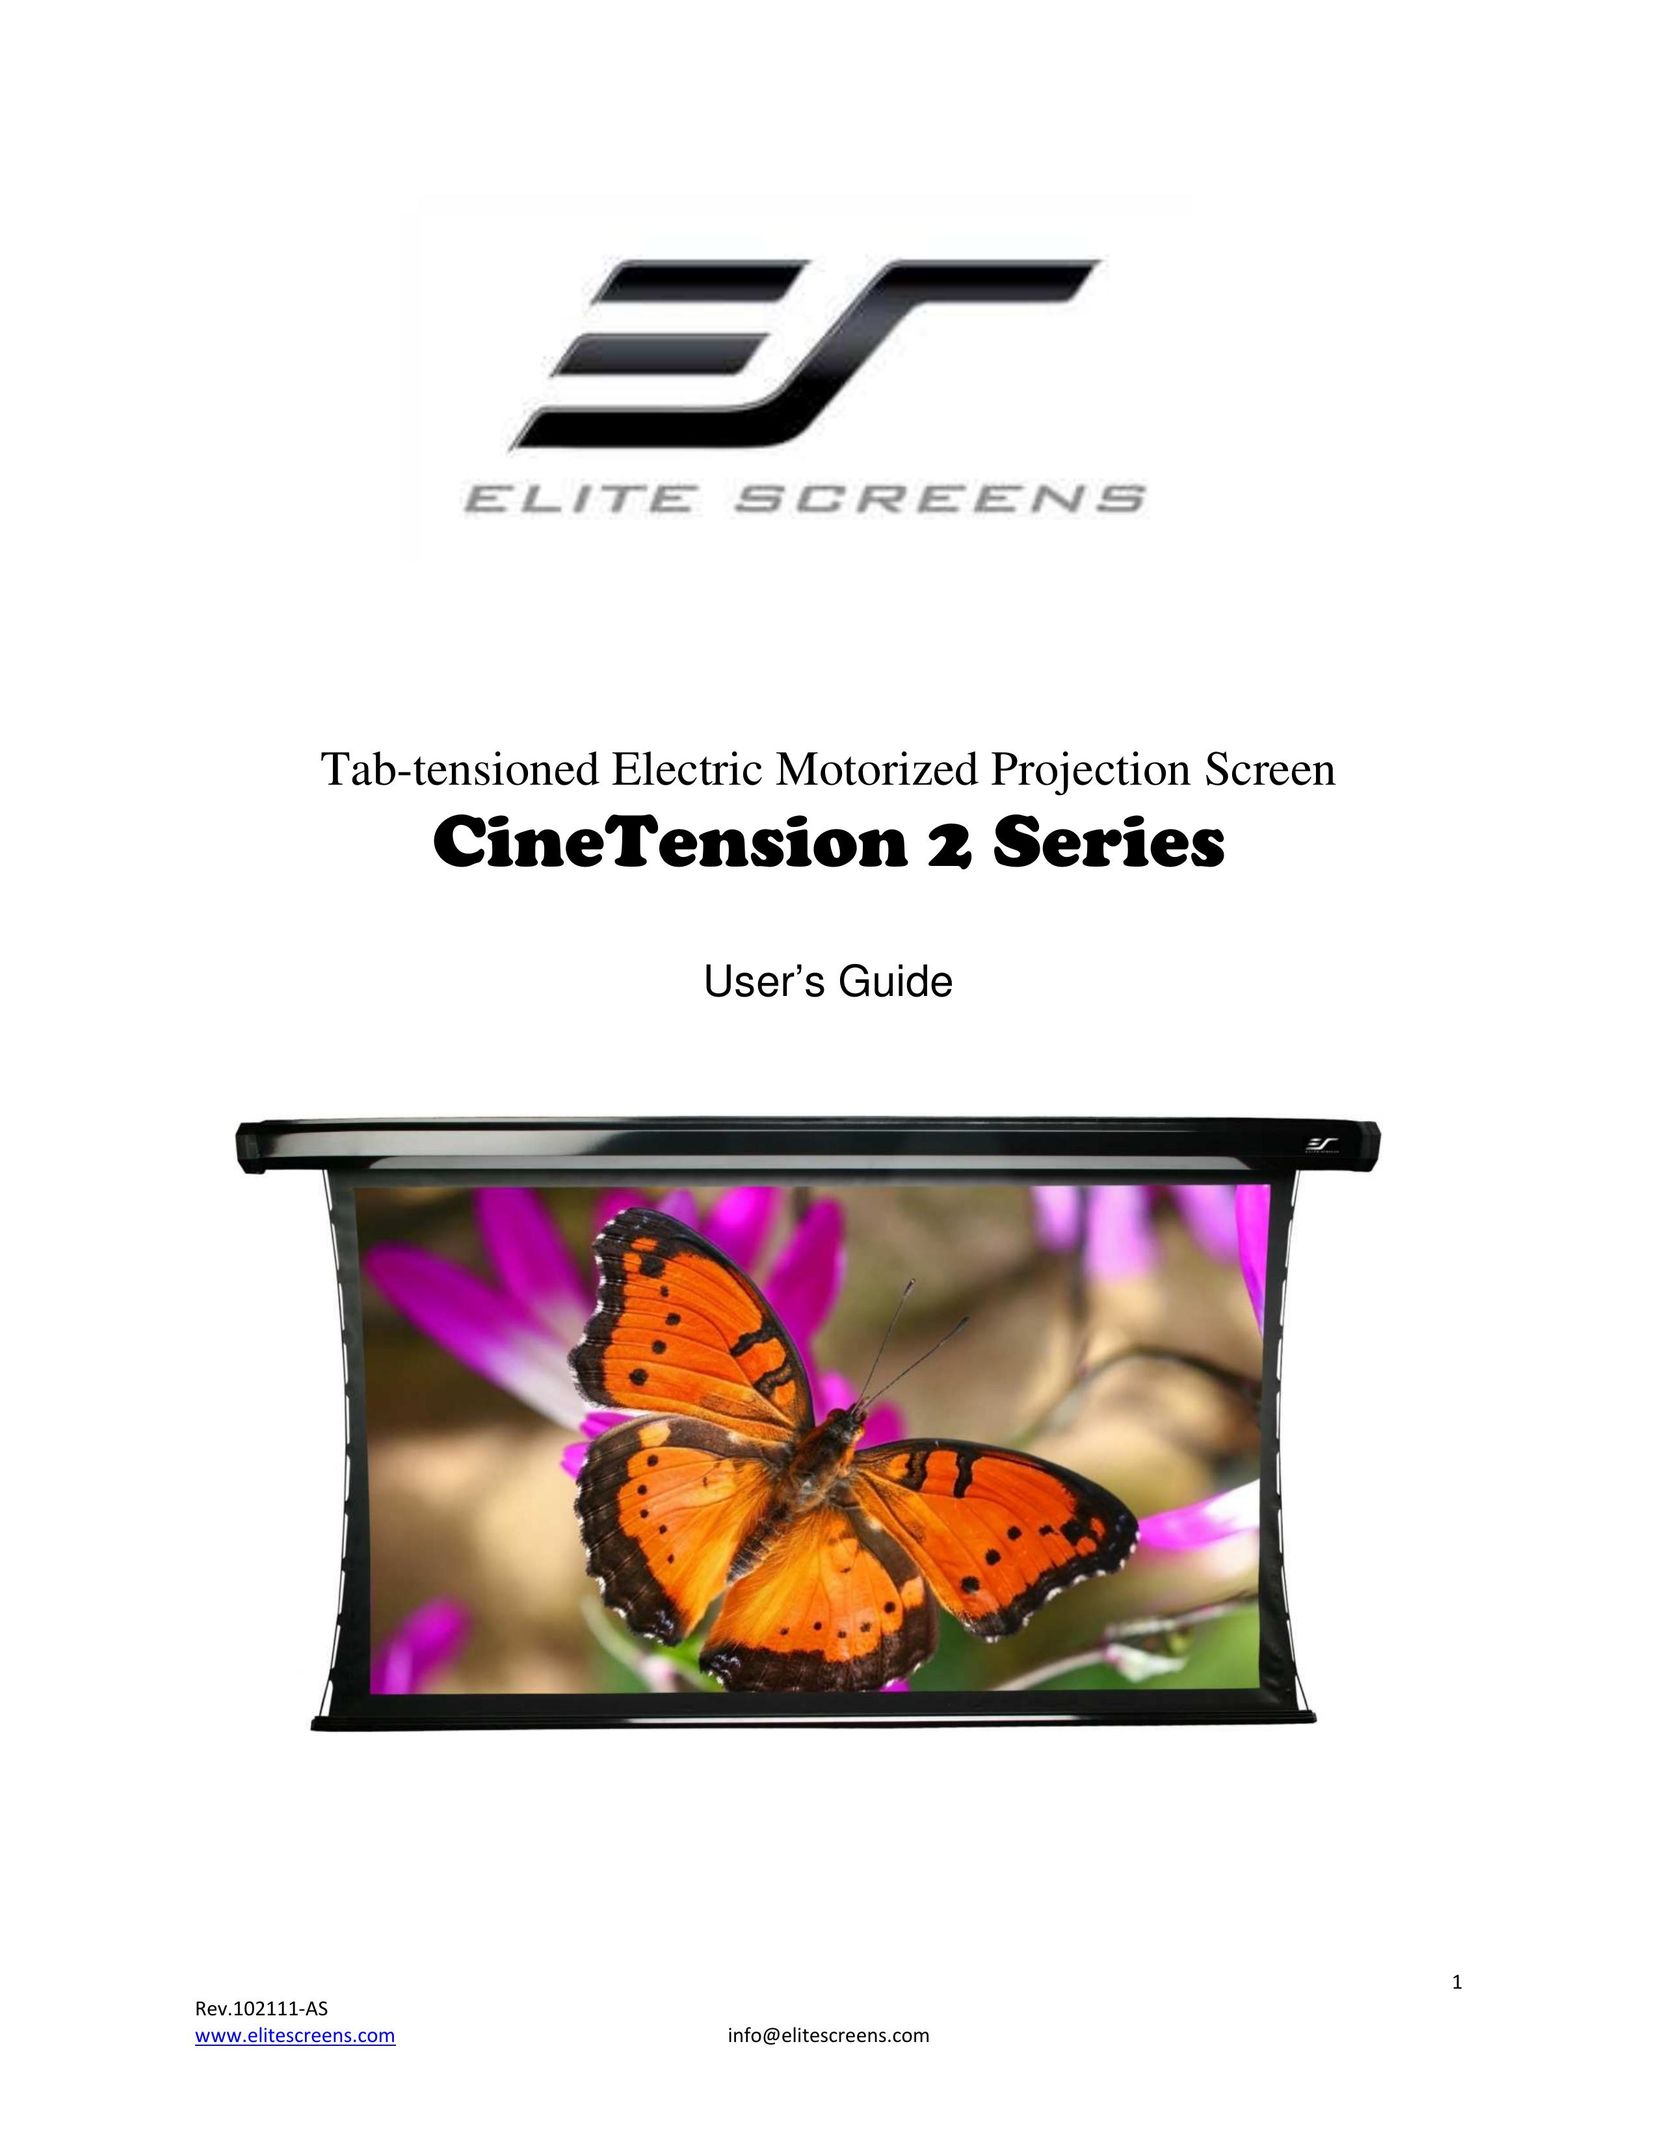 Elite Screens CineTension 2 Home Theater Screen User Manual